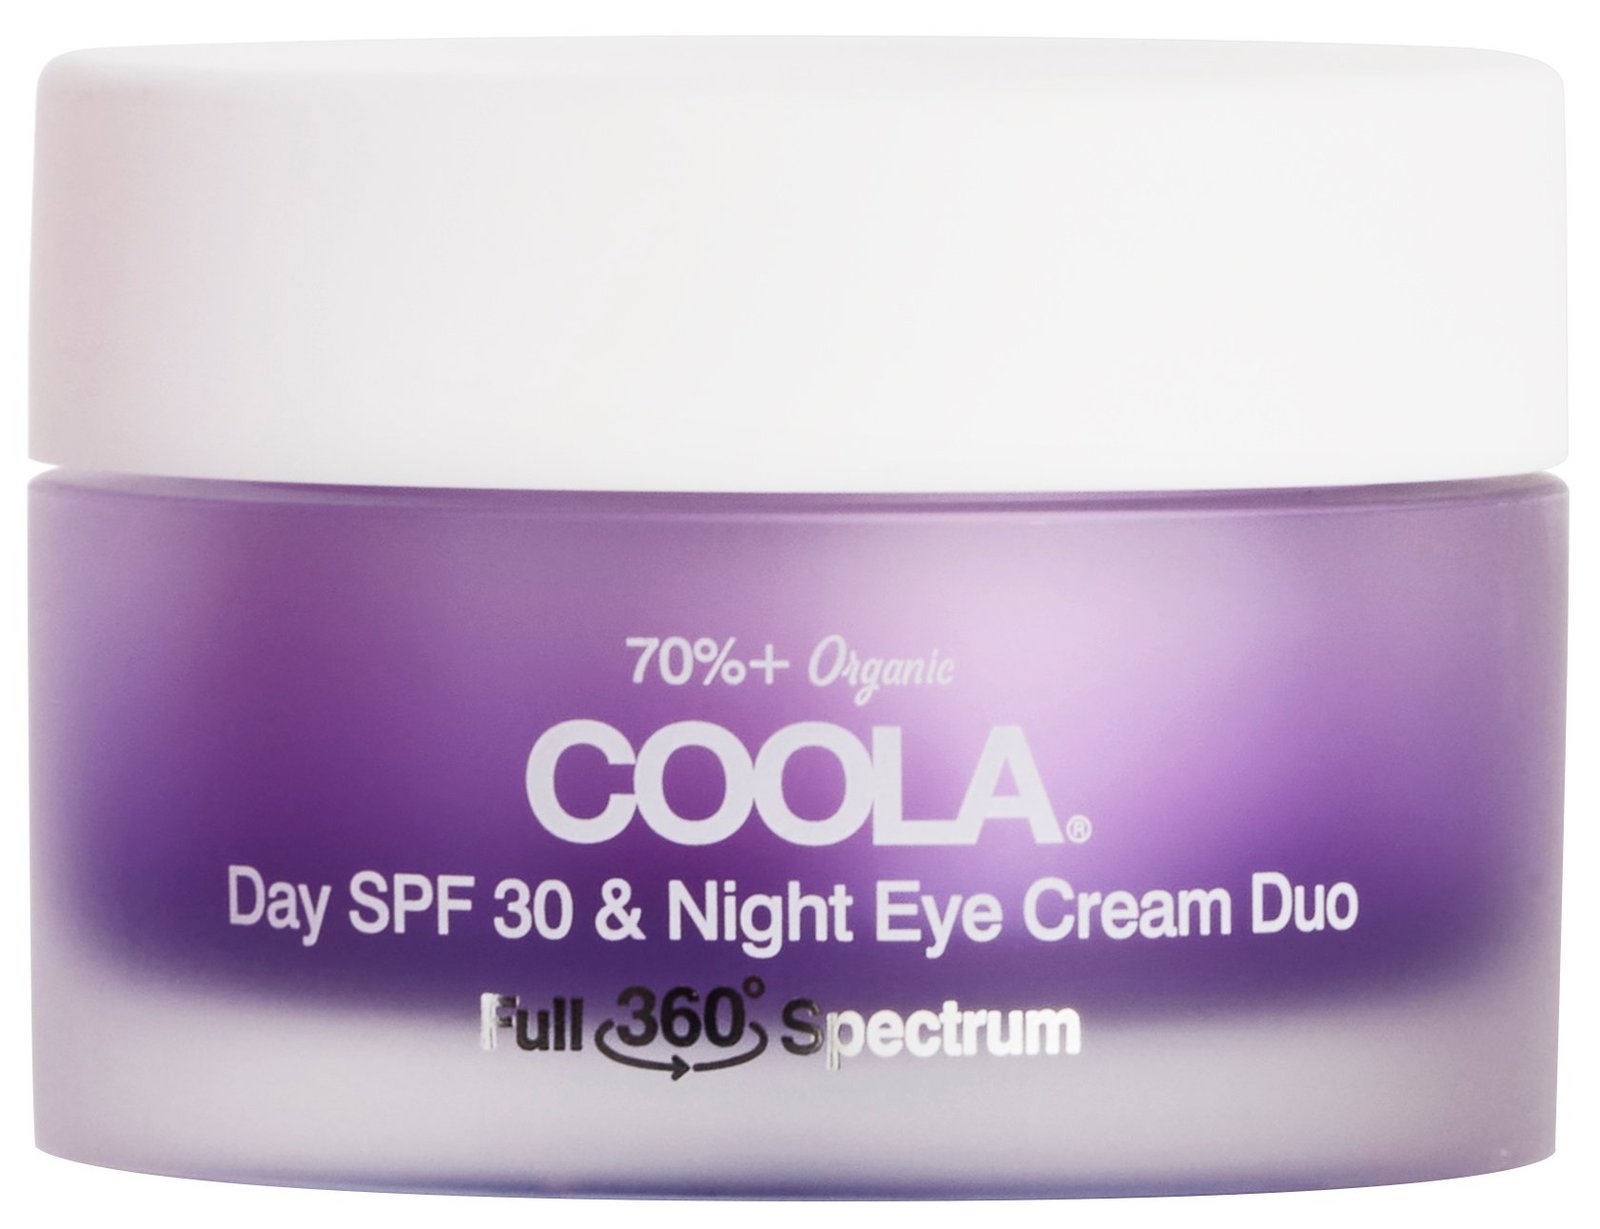 COOLA Day SPF 30 & Night Eye Cream Duo